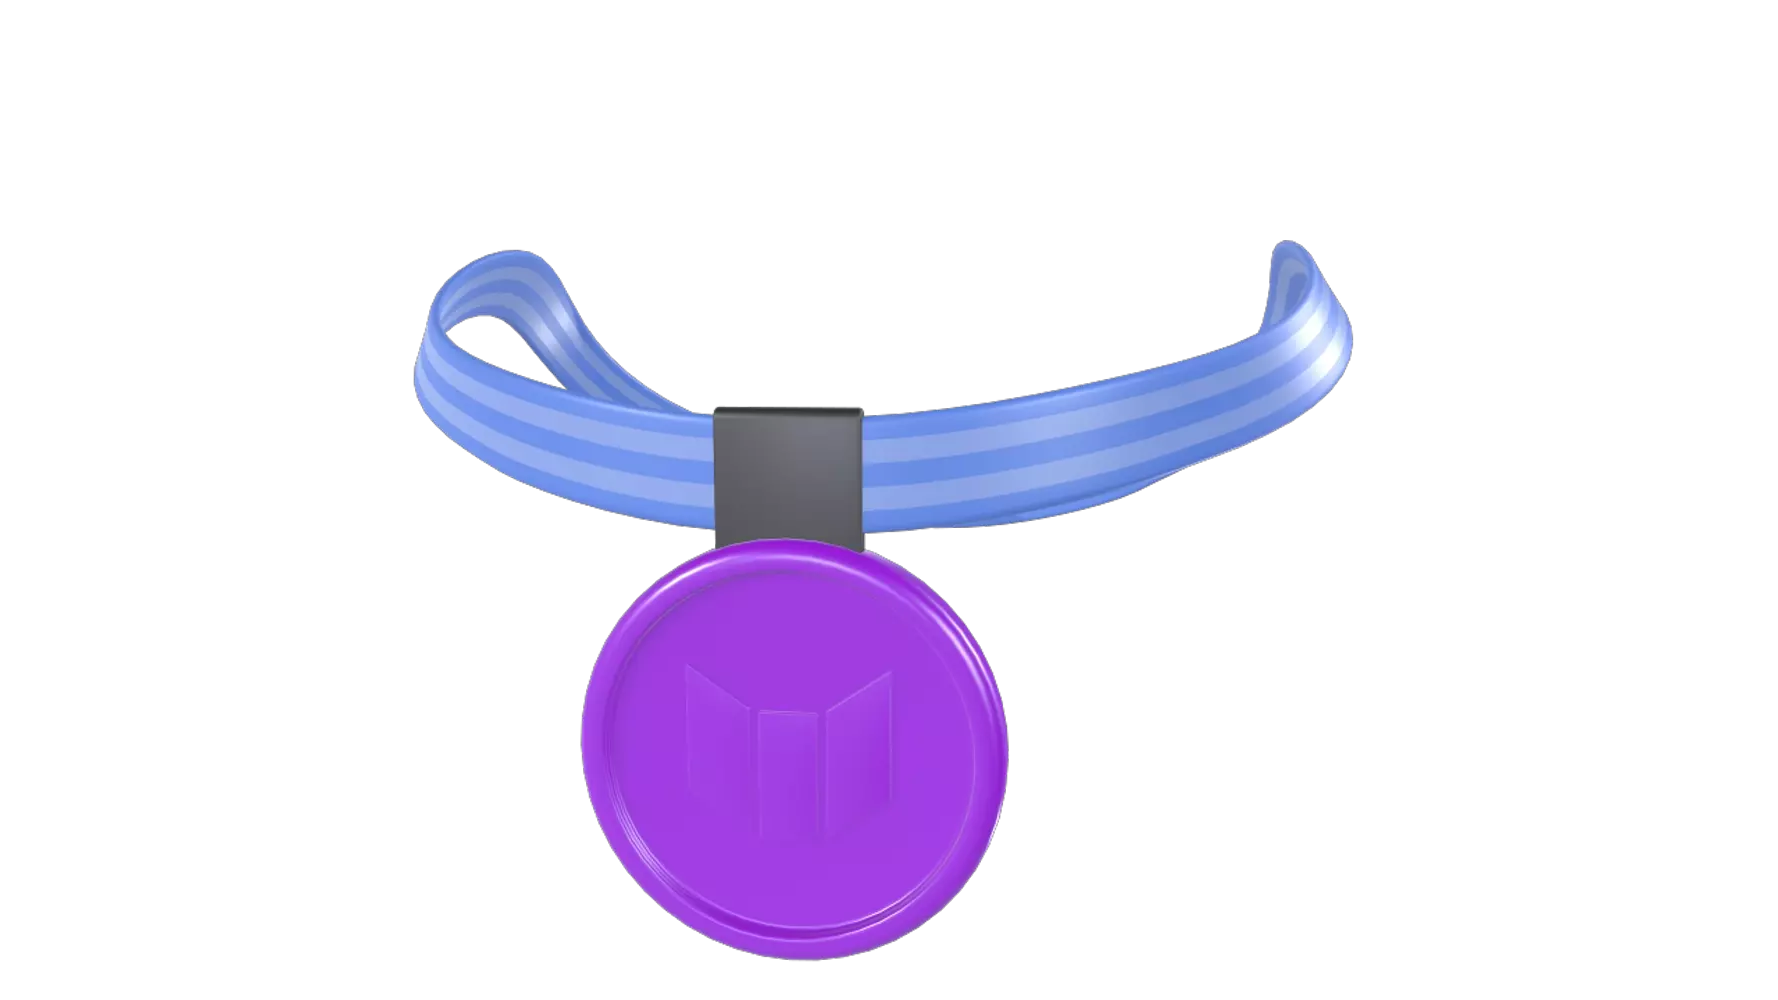 Gym Medal 3D Graphic